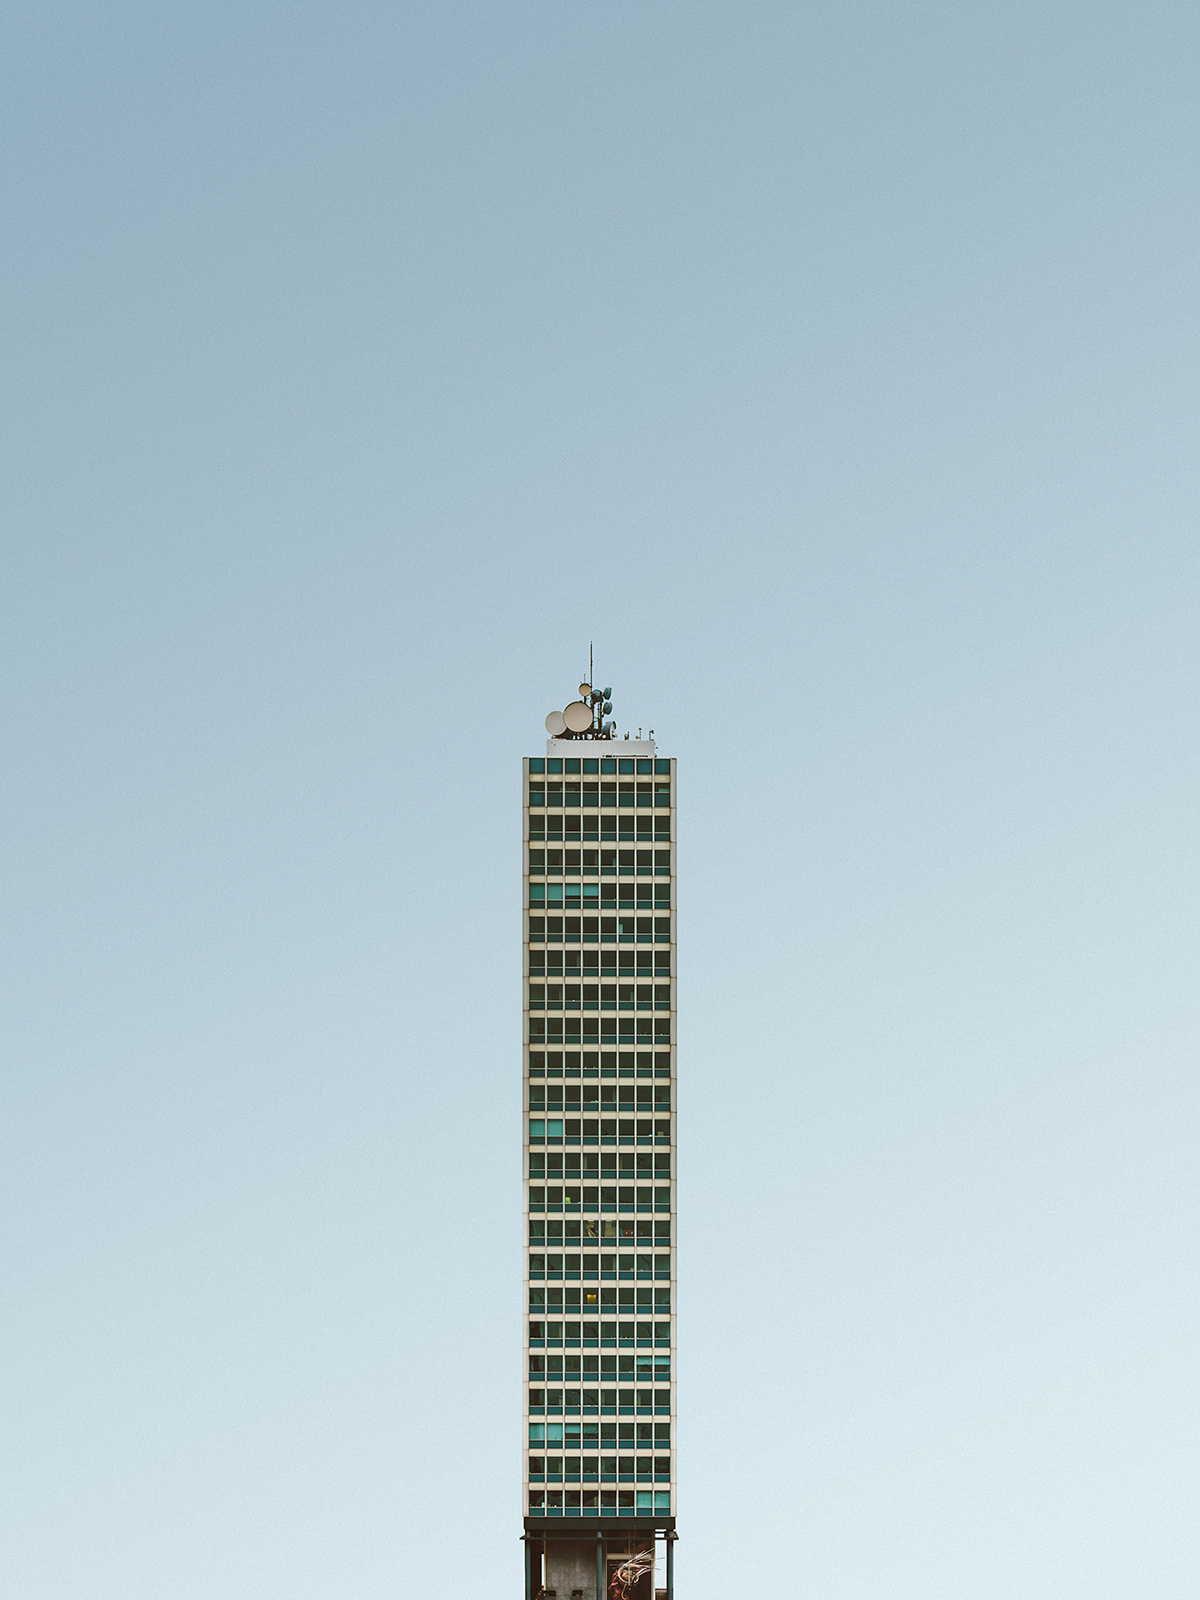 architecture building skyscraper tower block SKY